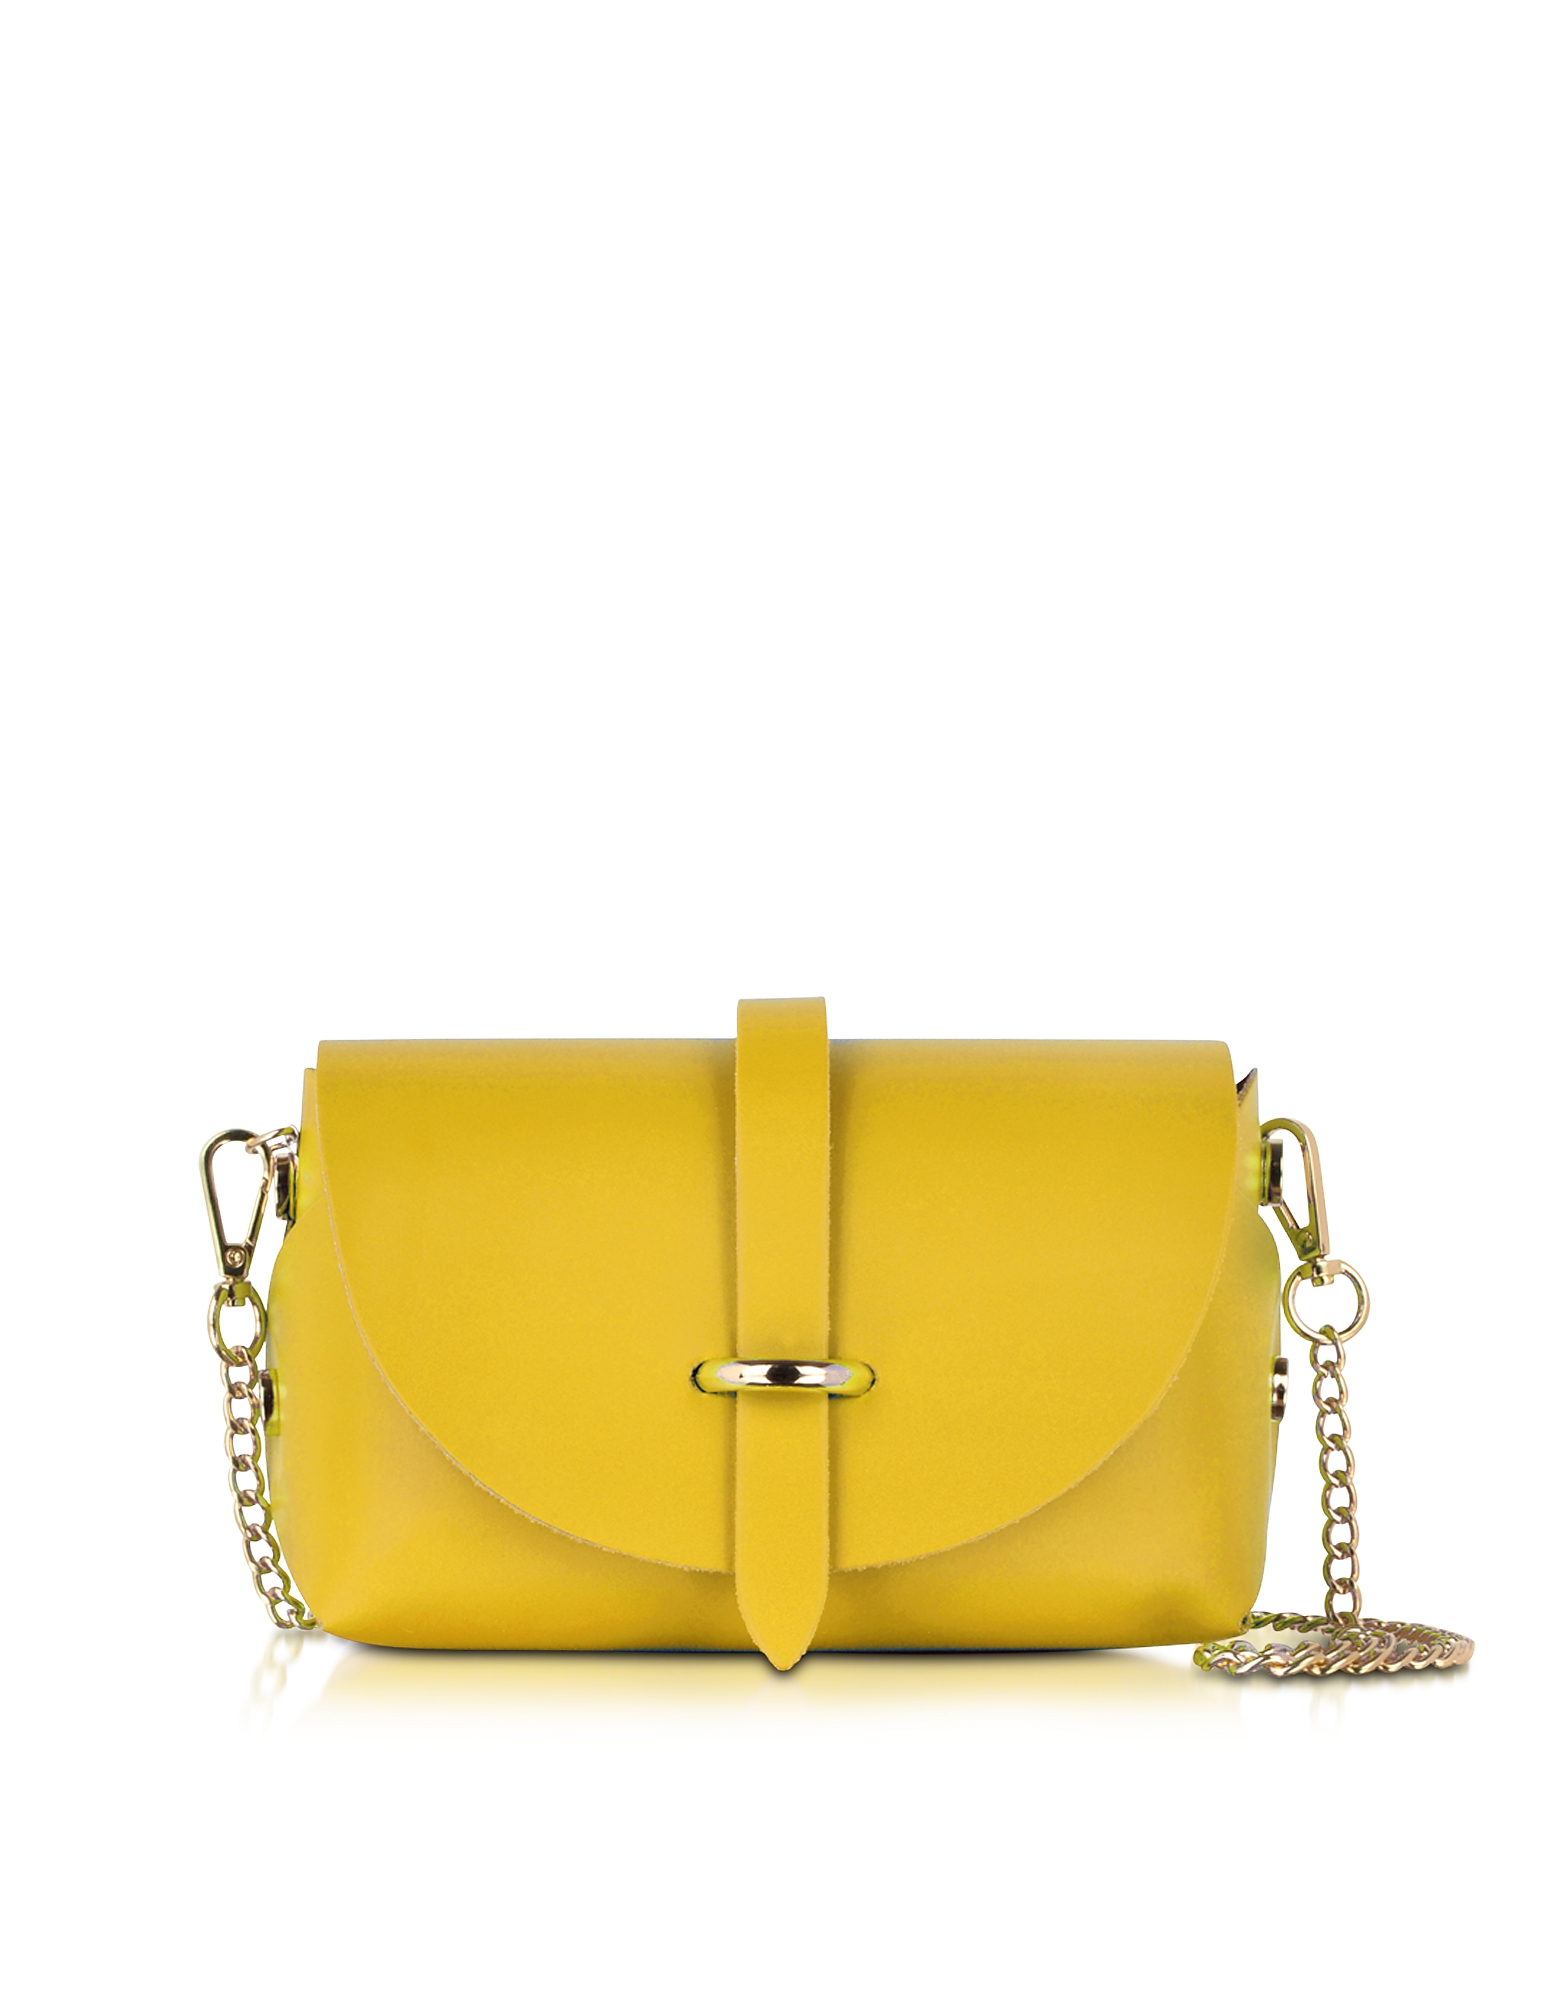 Le Parmentier - Caviar Small Yellow Leather Shoulder Bag | FASHION ...